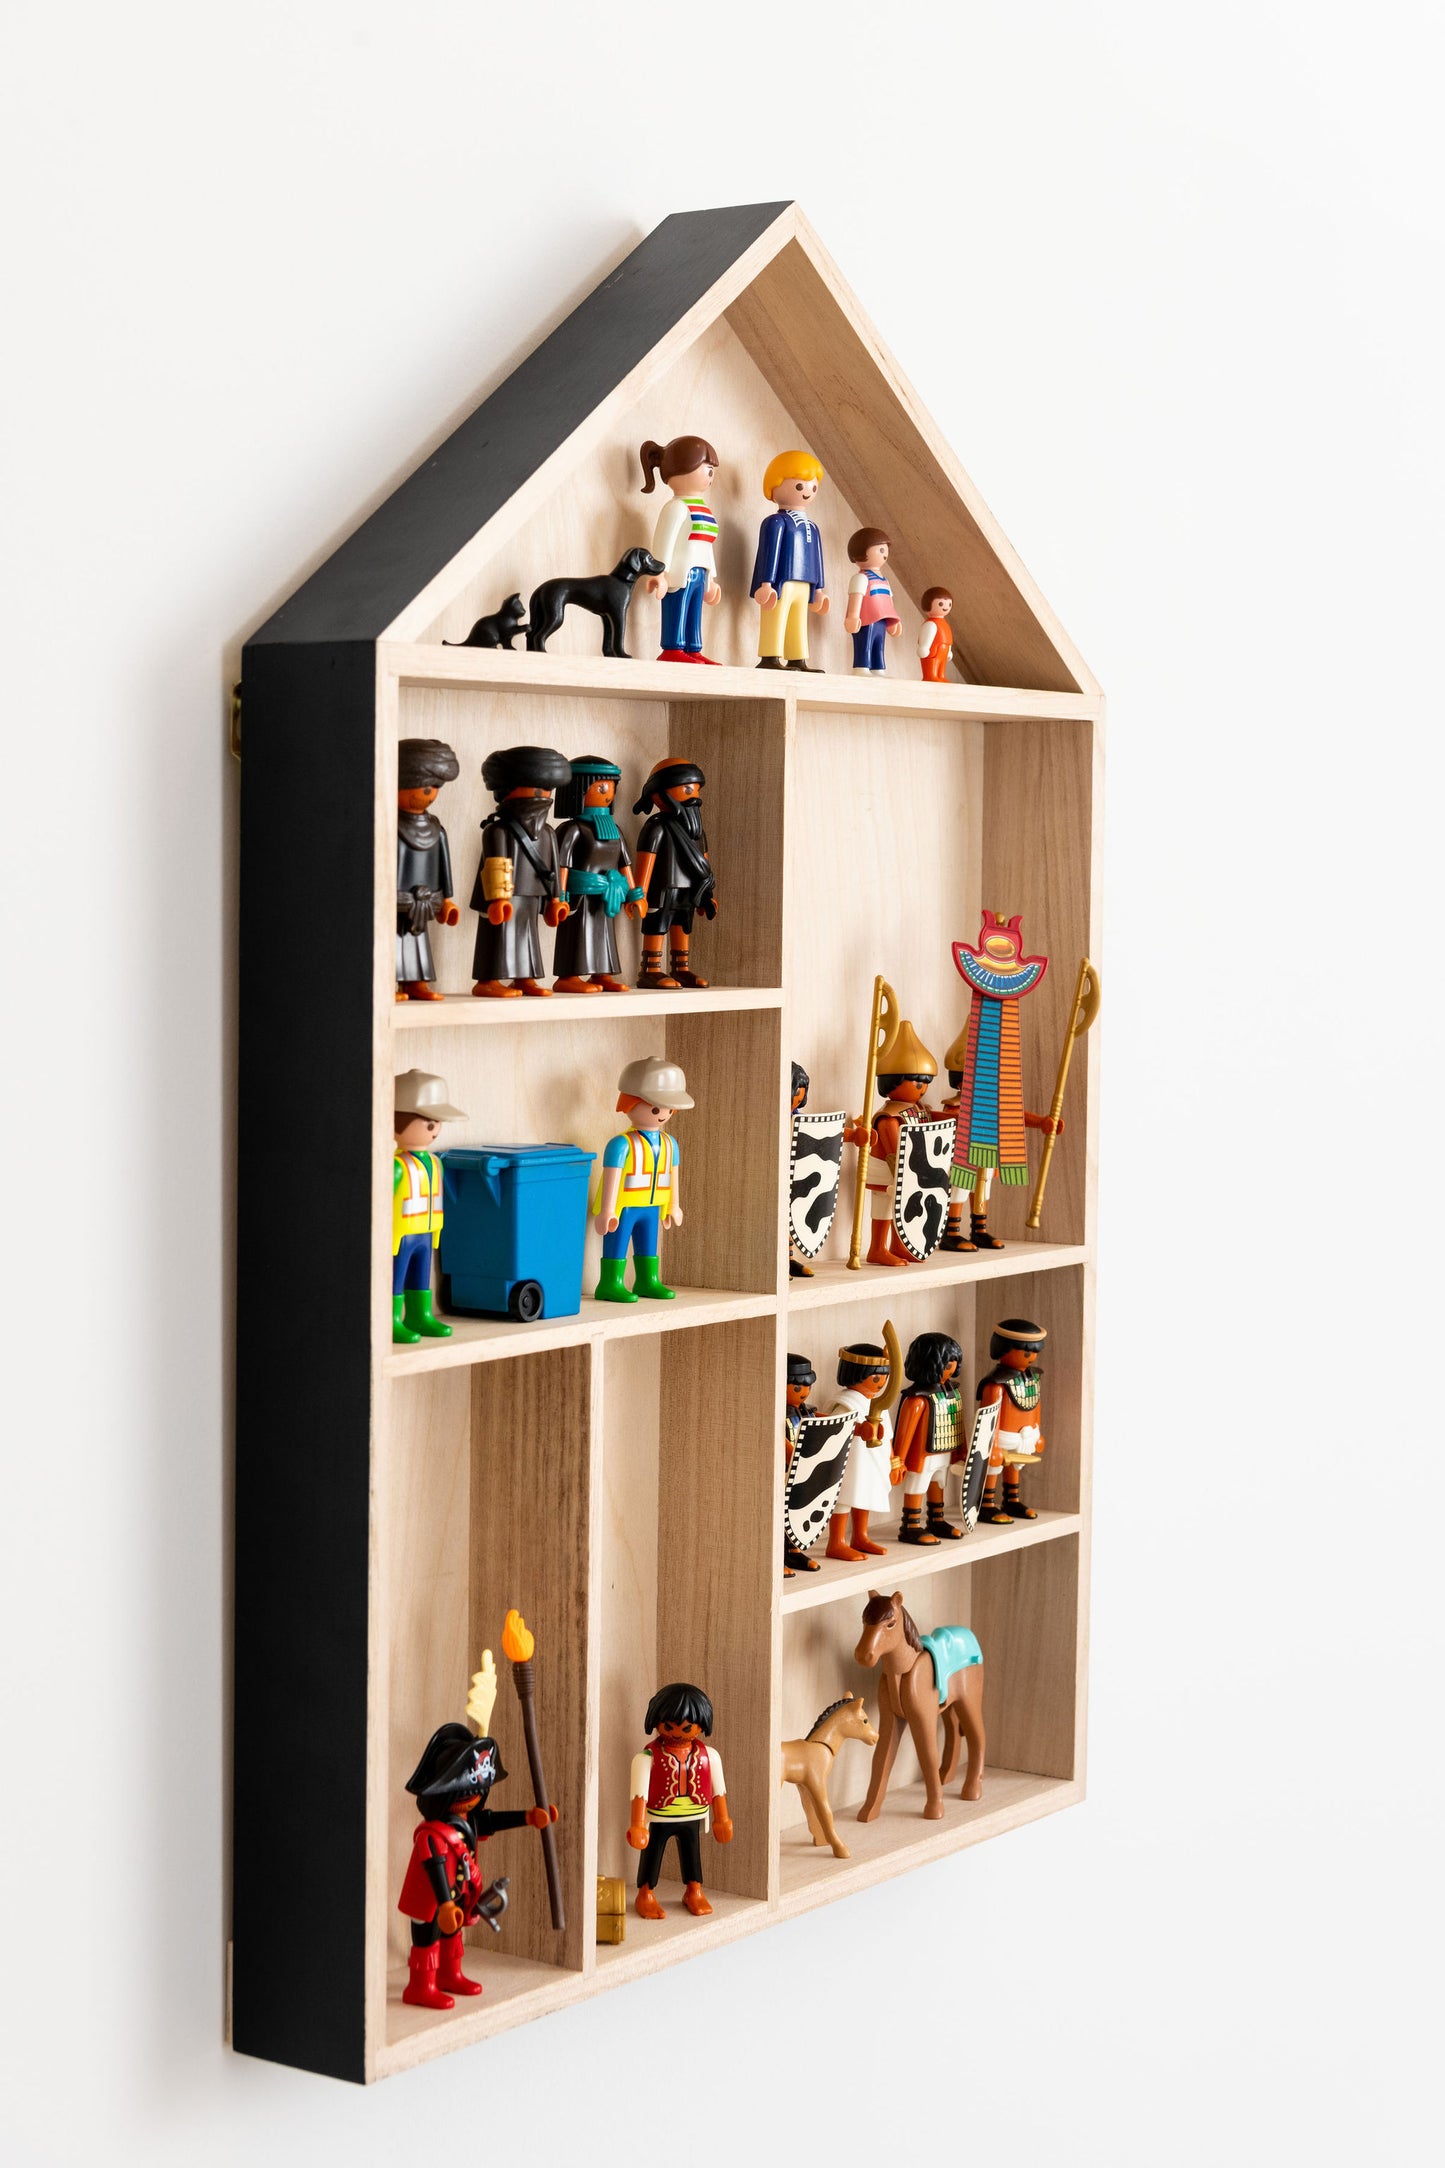 Side view closeup on a house shaped shelf with Playmobil figures.